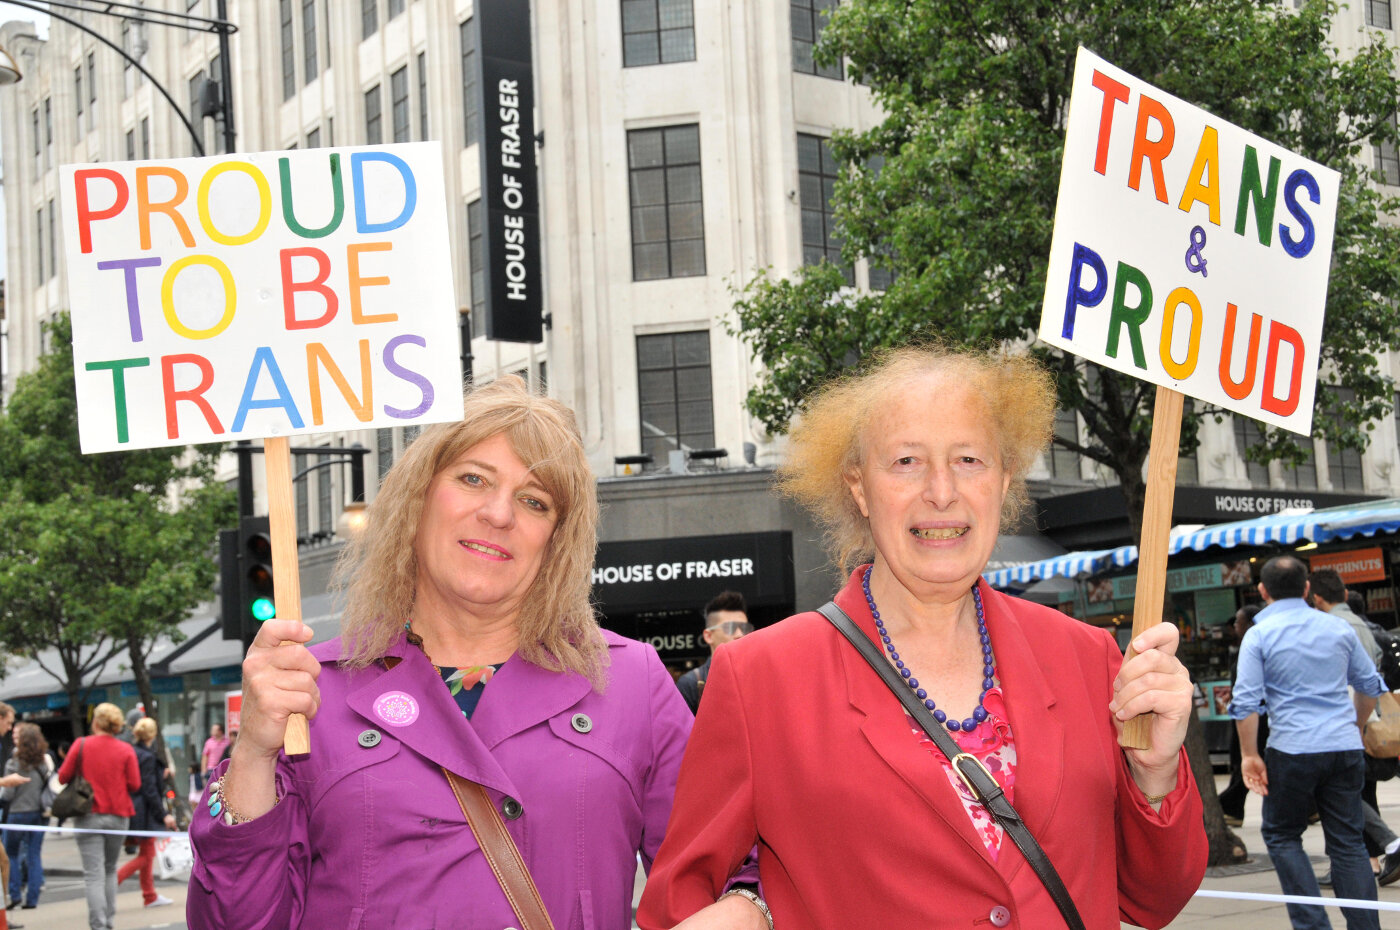 Trans Pride marchers at World Pride, London 2012